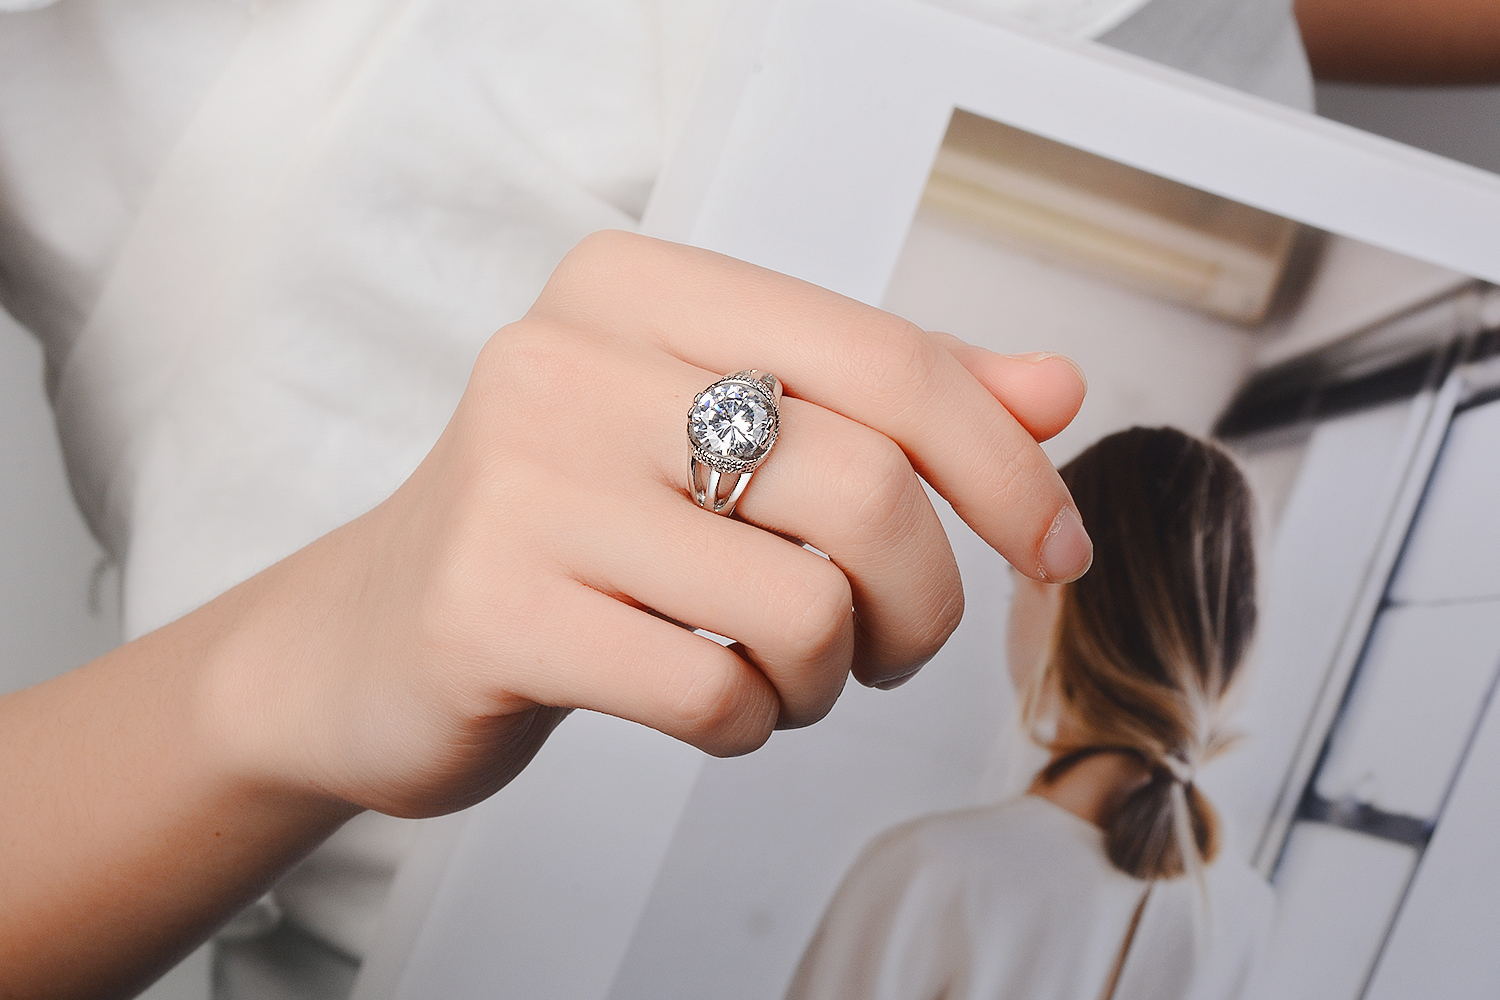 Titanium Steel Casting Fashion Simple Female Jewelry Ring